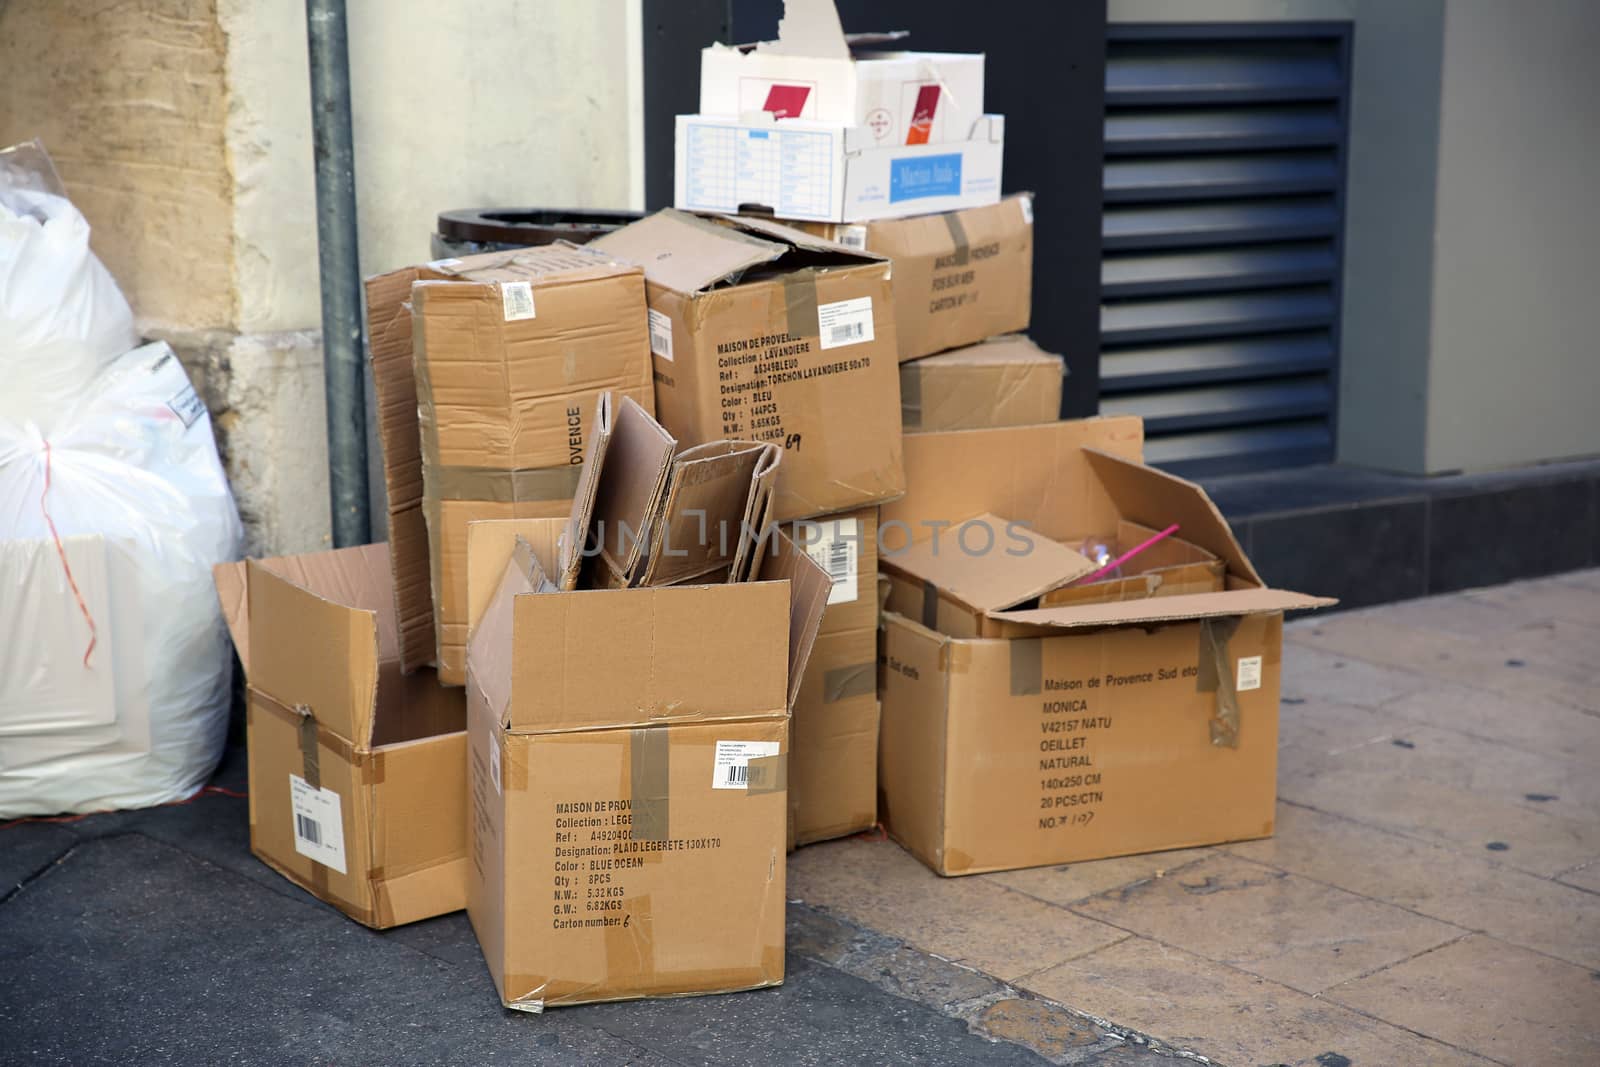 Trash Cardboard Boxes by bensib